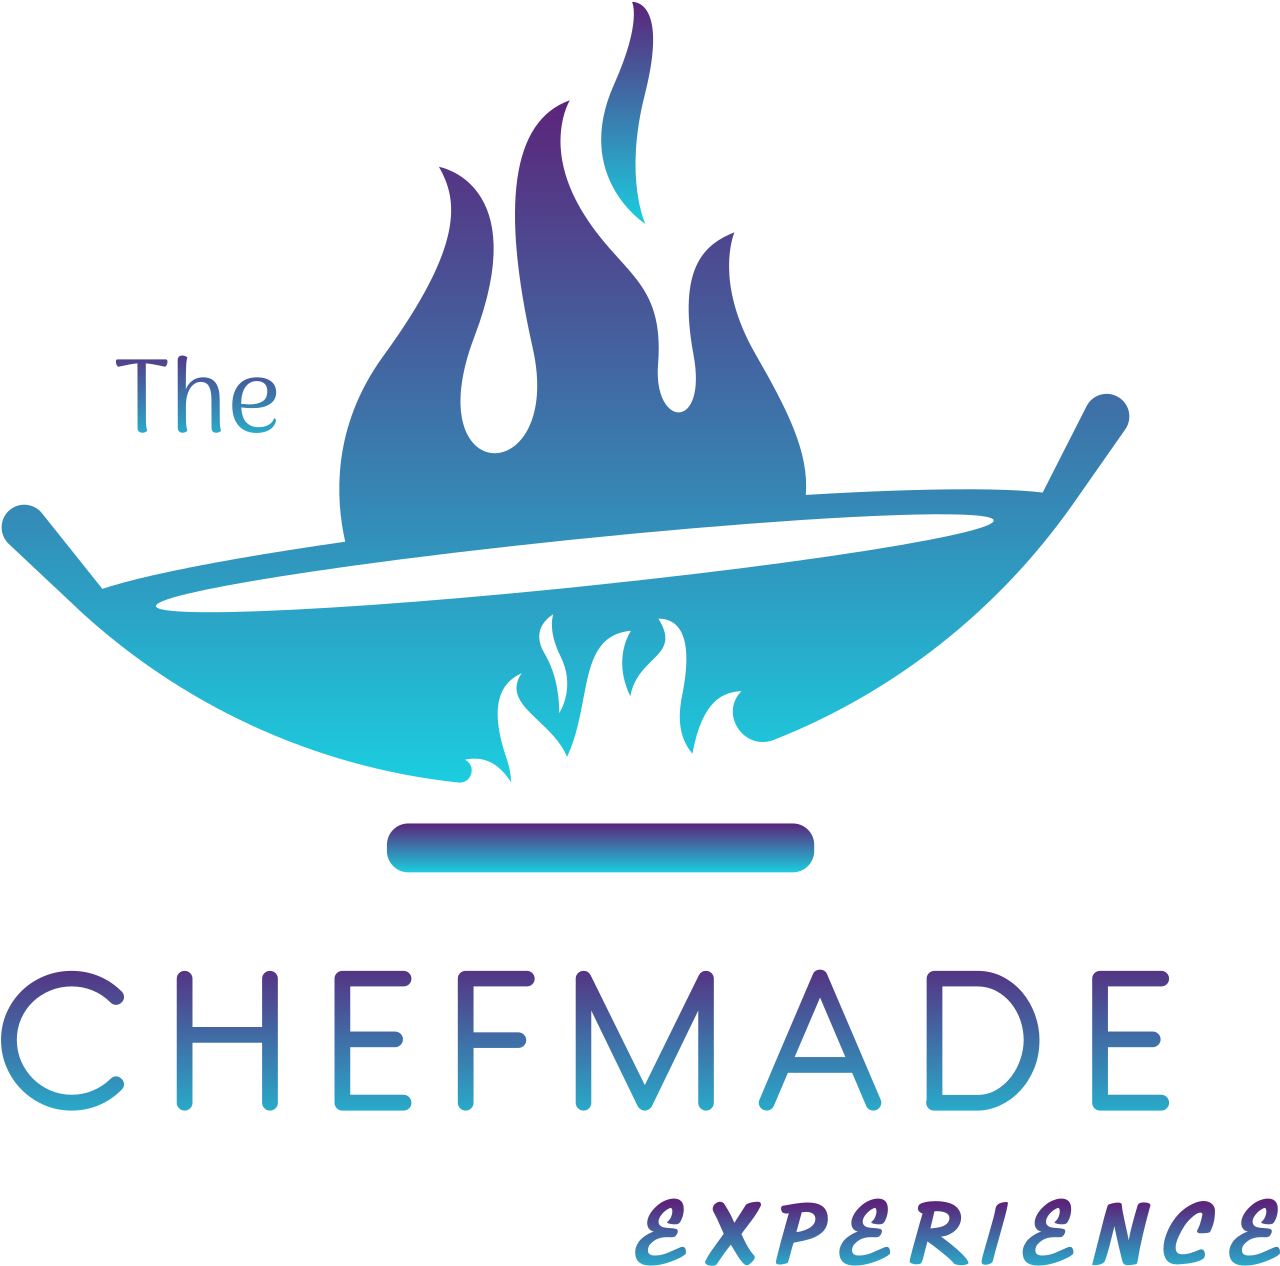 CHEFMADE's web page